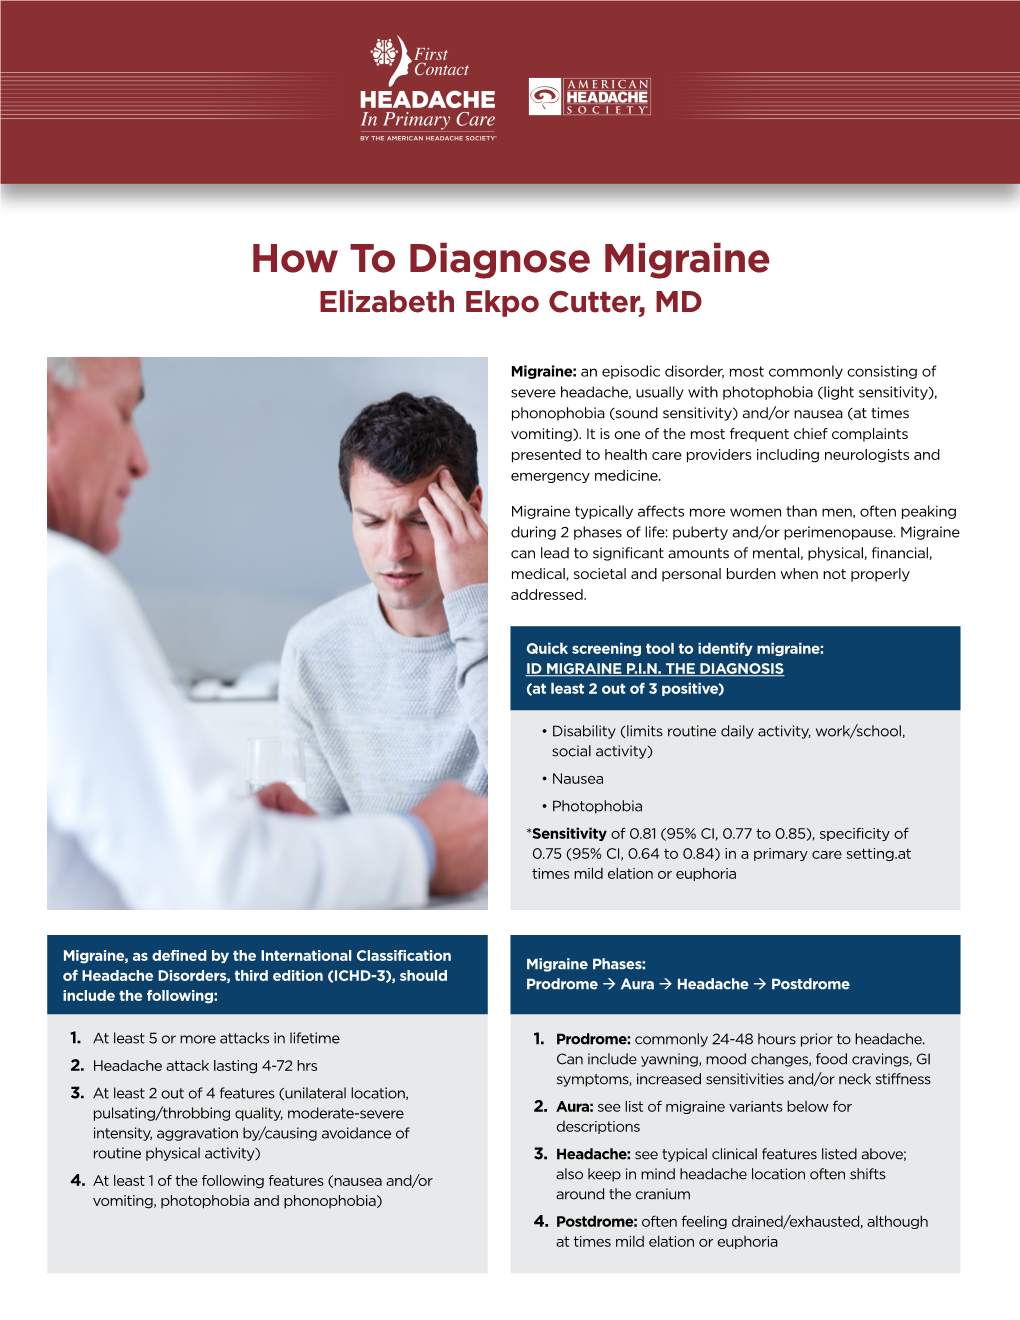 How to Diagnose Migraine Elizabeth Ekpo Cutter, MD